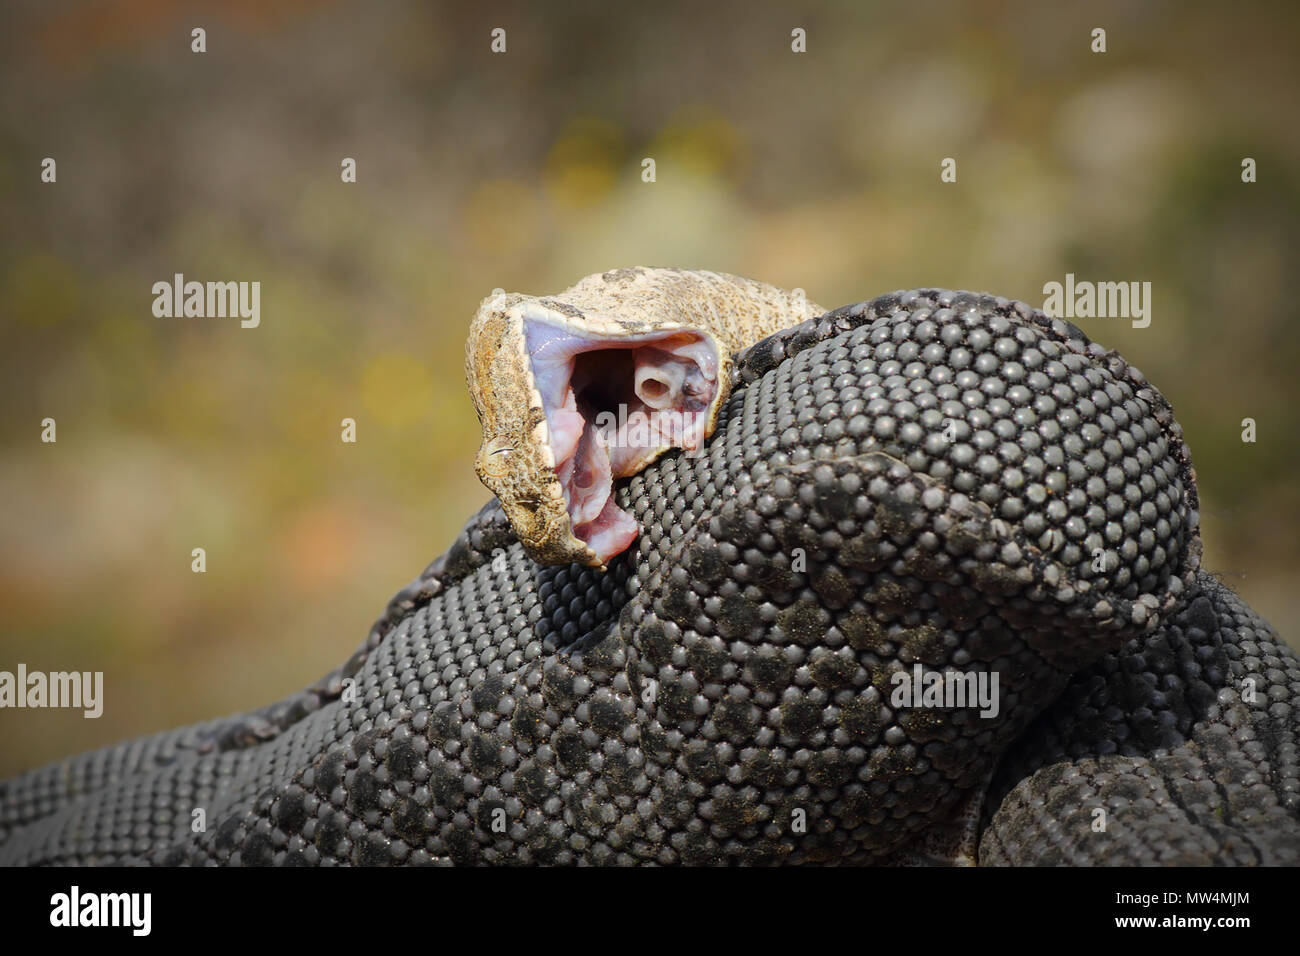 Vipera lebetina scweizeri biting protective glove ( rarest european snake, the dangerous Milos viper  ) Stock Photo